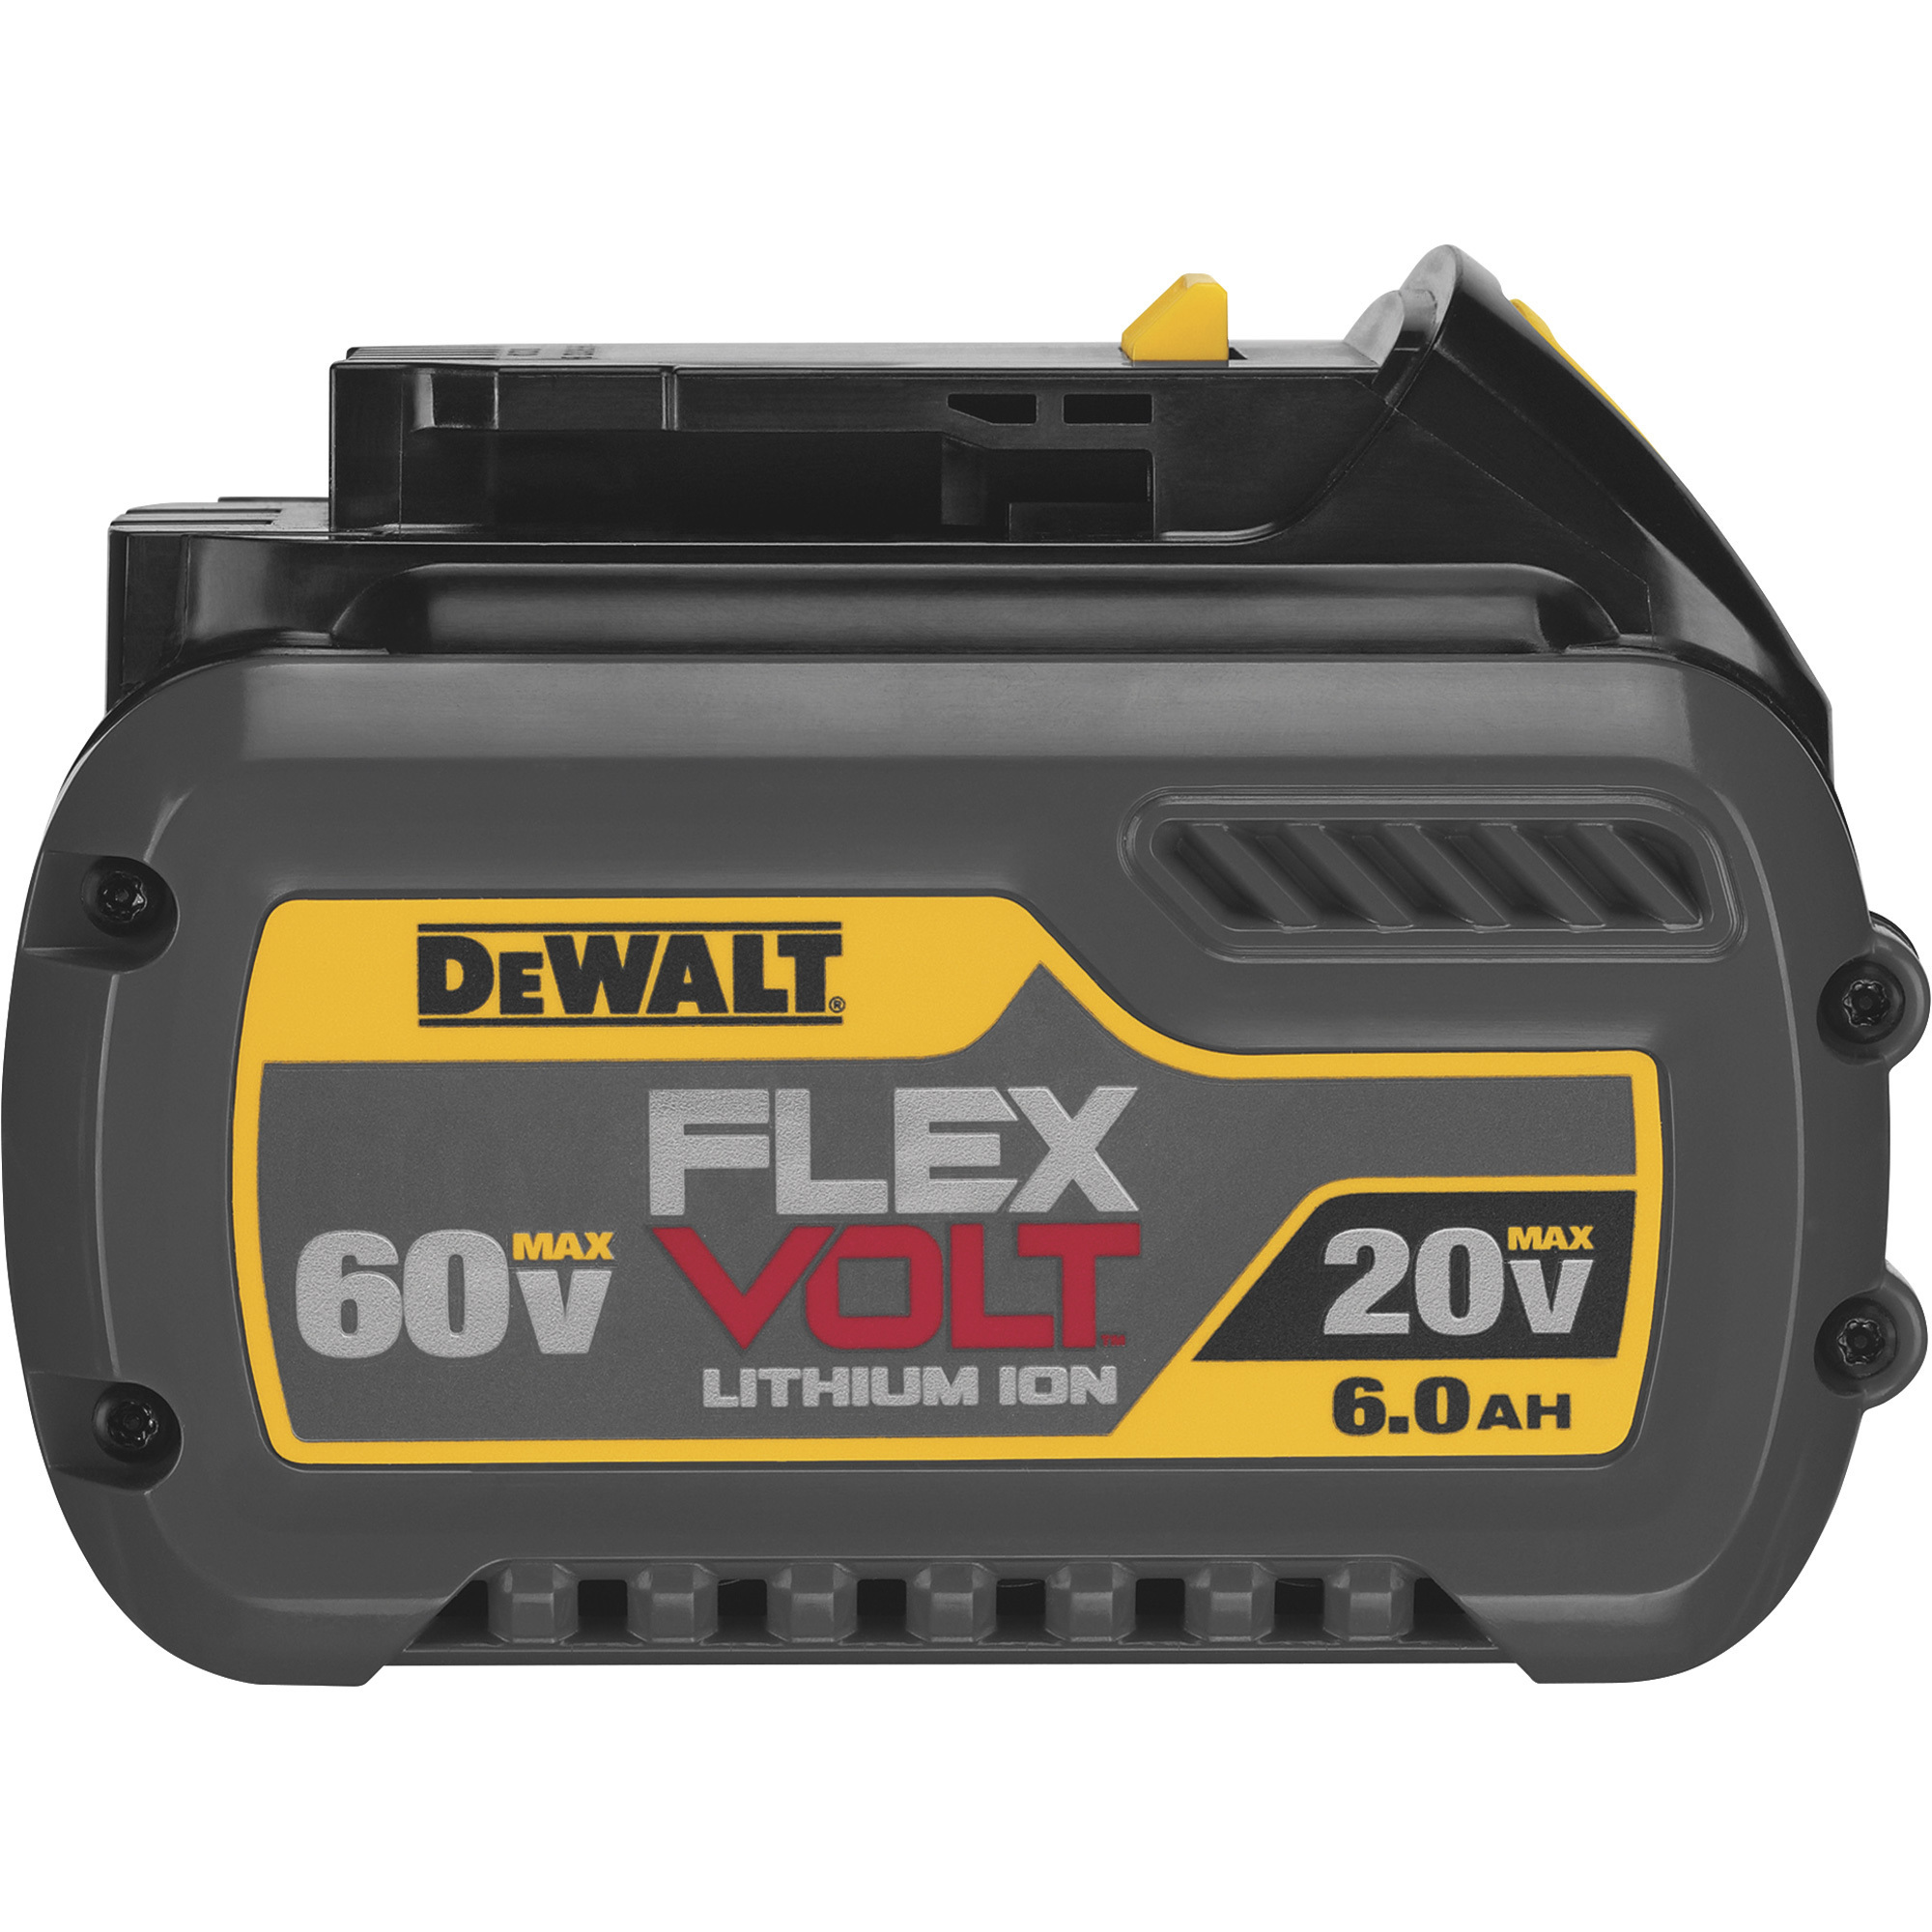 DEWALT FLEXVOLT 20V/60V MAX Battery Pack, 6.0Ah, Model DCB606